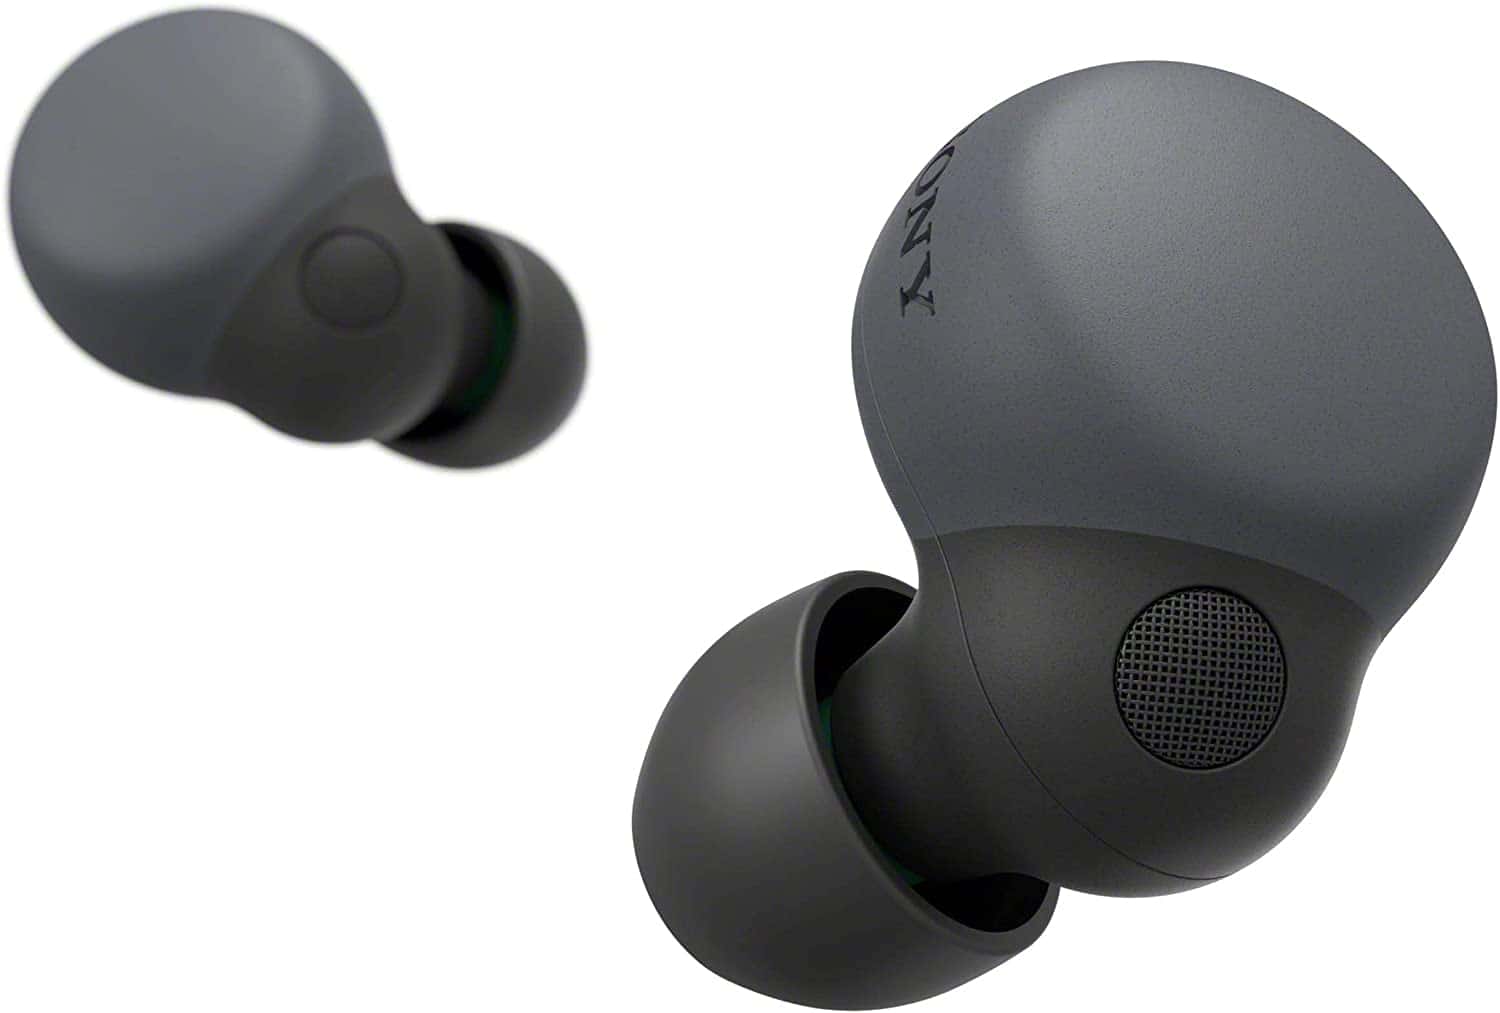 Deal Alert: Enjoy 26% discount on Sony LinkBuds S Truly Wireless earbuds